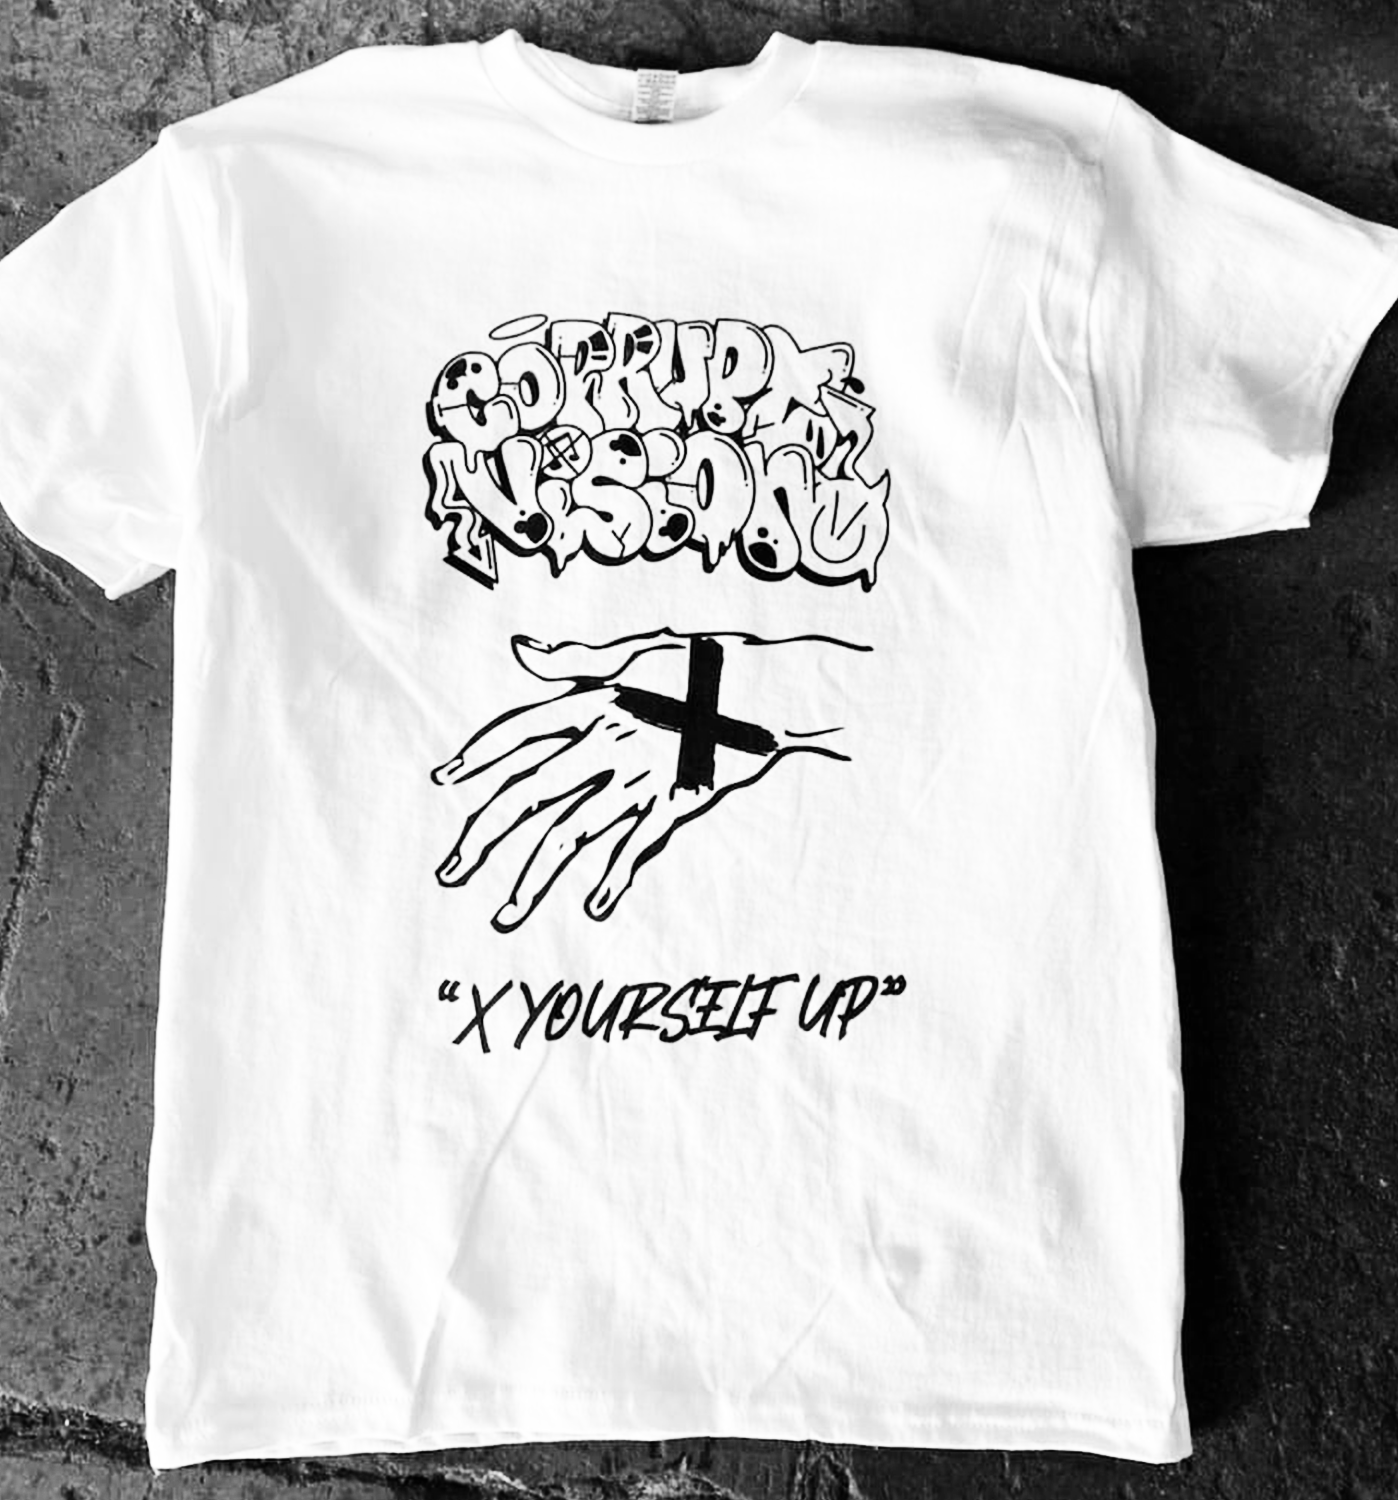 Corrupt Vision - "X YOURSELF UP" Shirt - MEDIUM